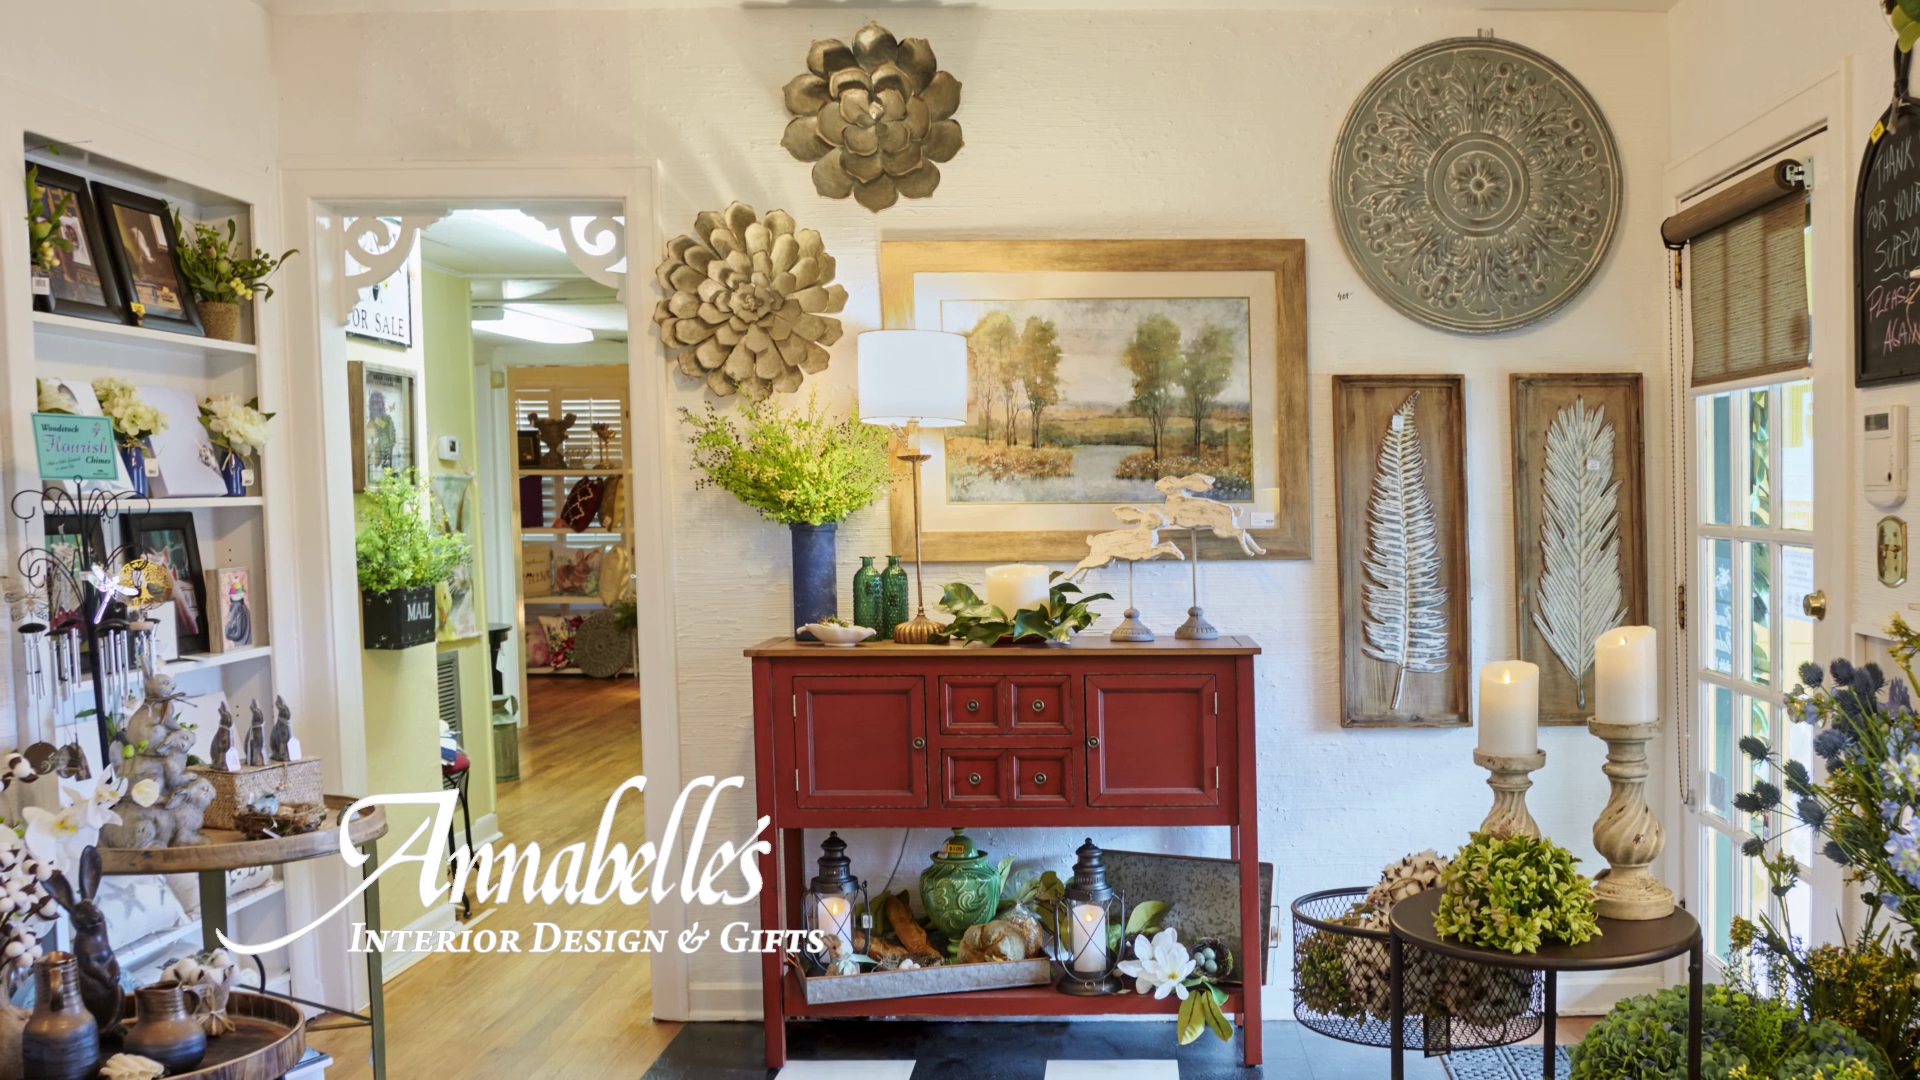 Annabelle's Interiors, Inc.